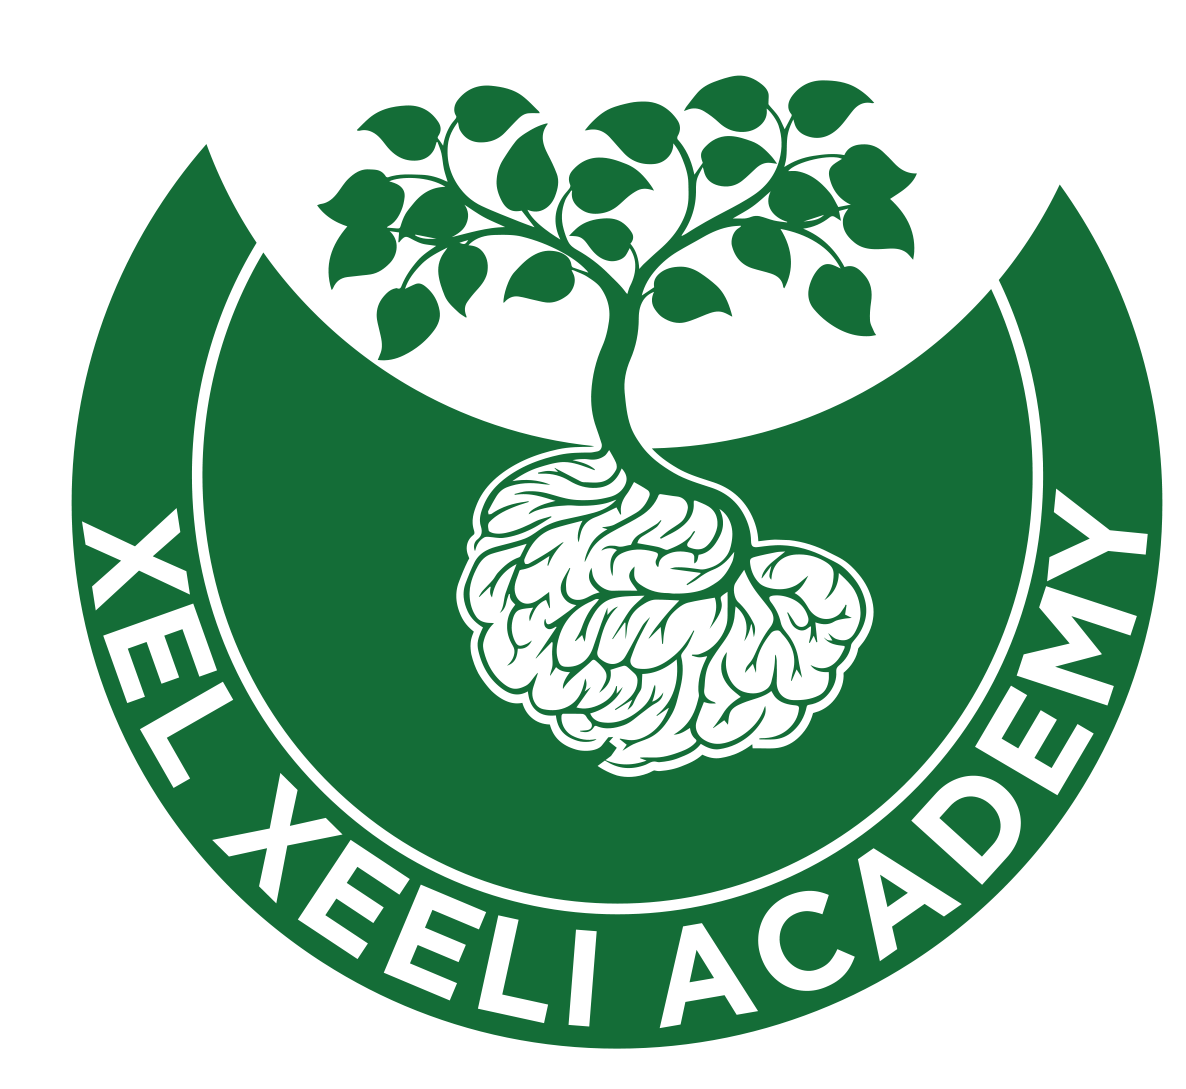 Xel-Xeeli Academy